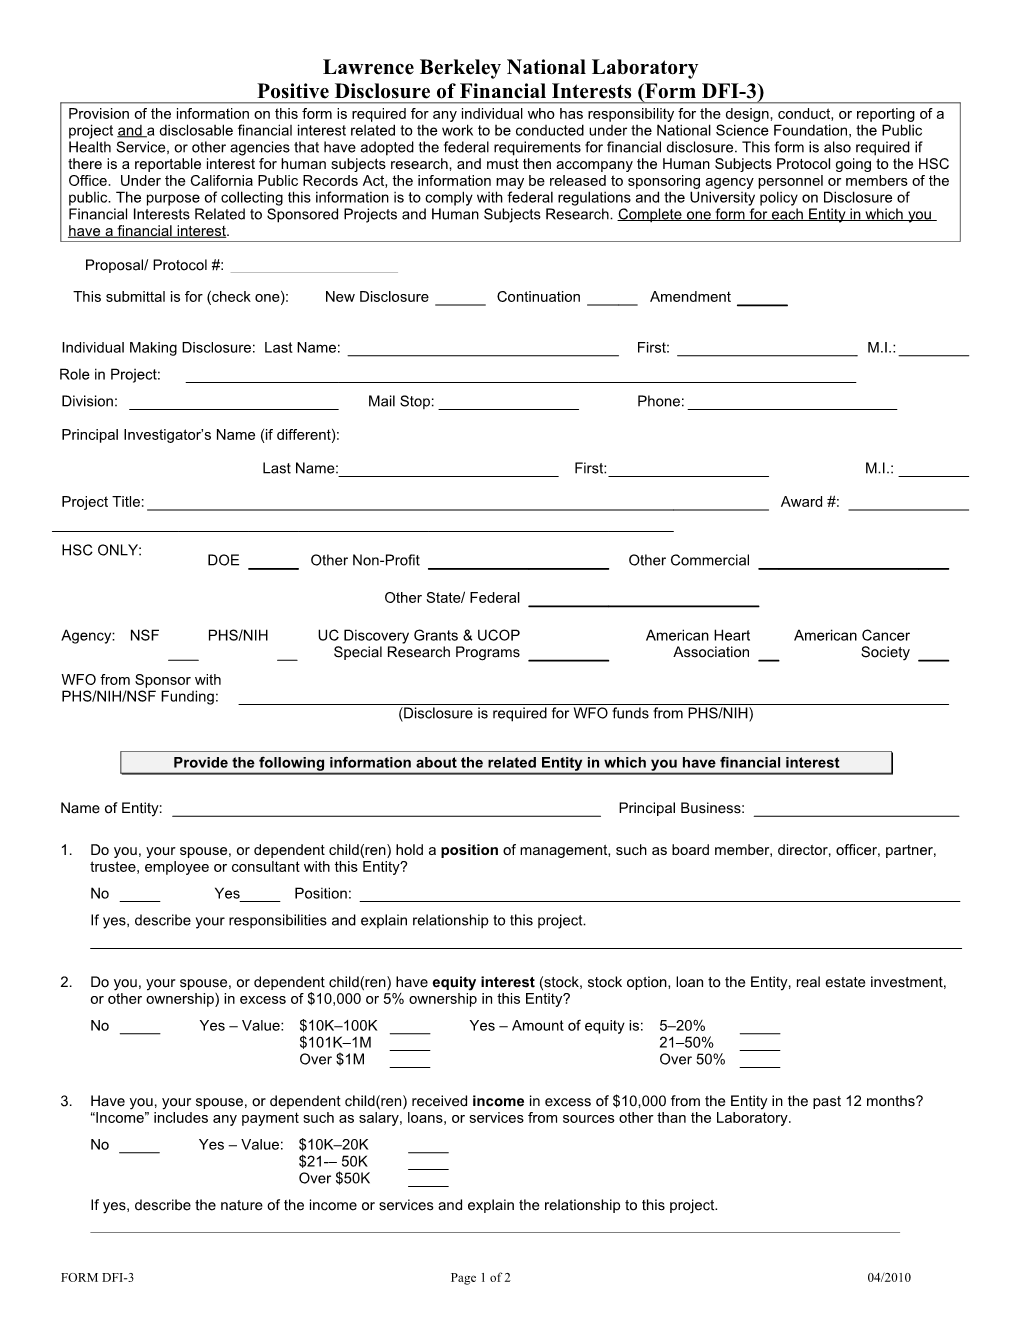 UCB NSF/NIH Form 9/5/95R